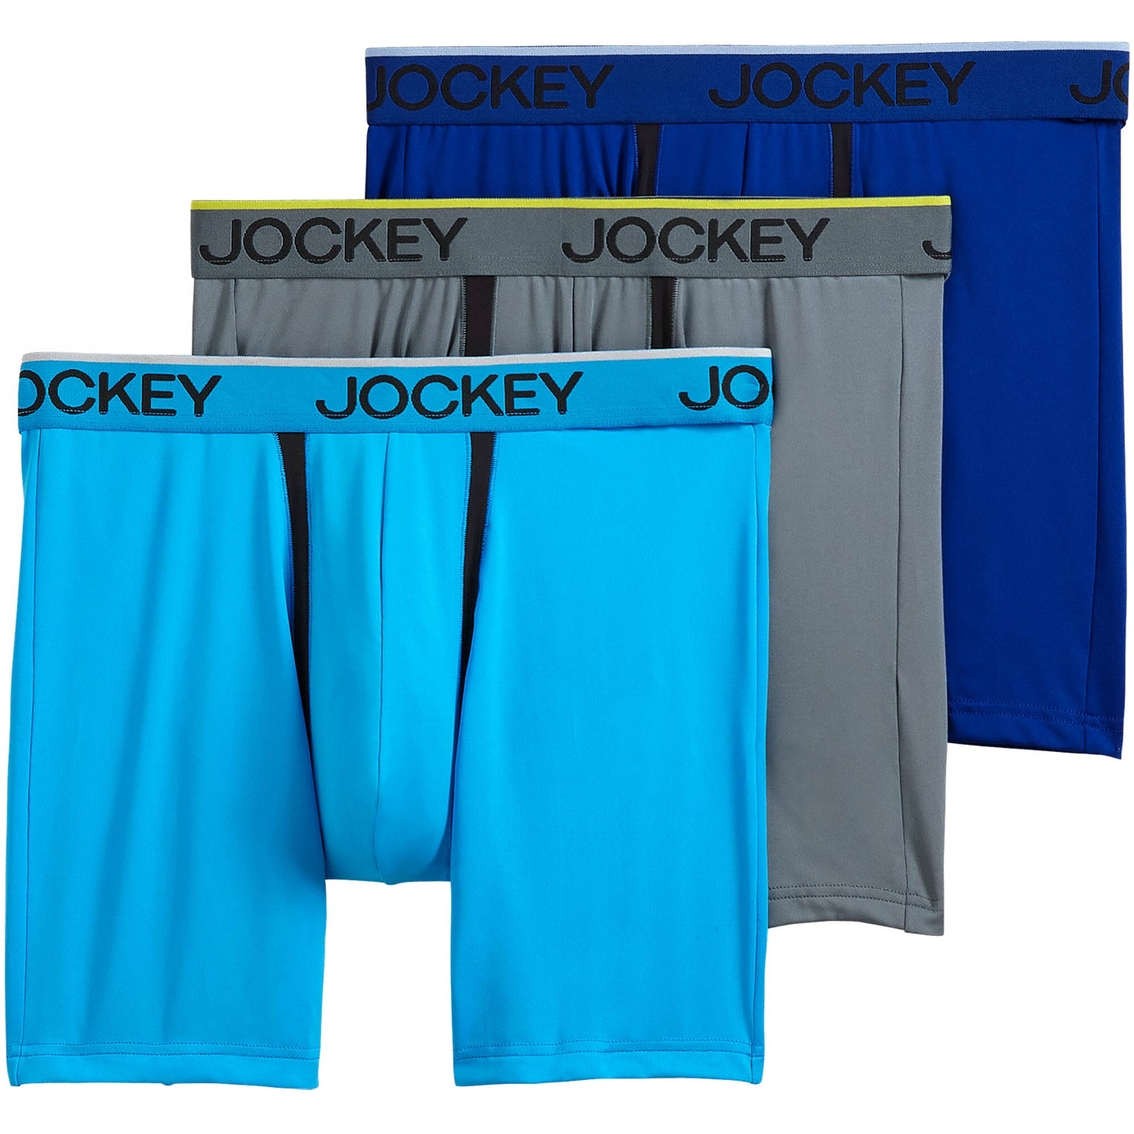 Jockey Chafe Proof Micro Boxer Briefs 3 Pk. | Underwear | Clothing ...